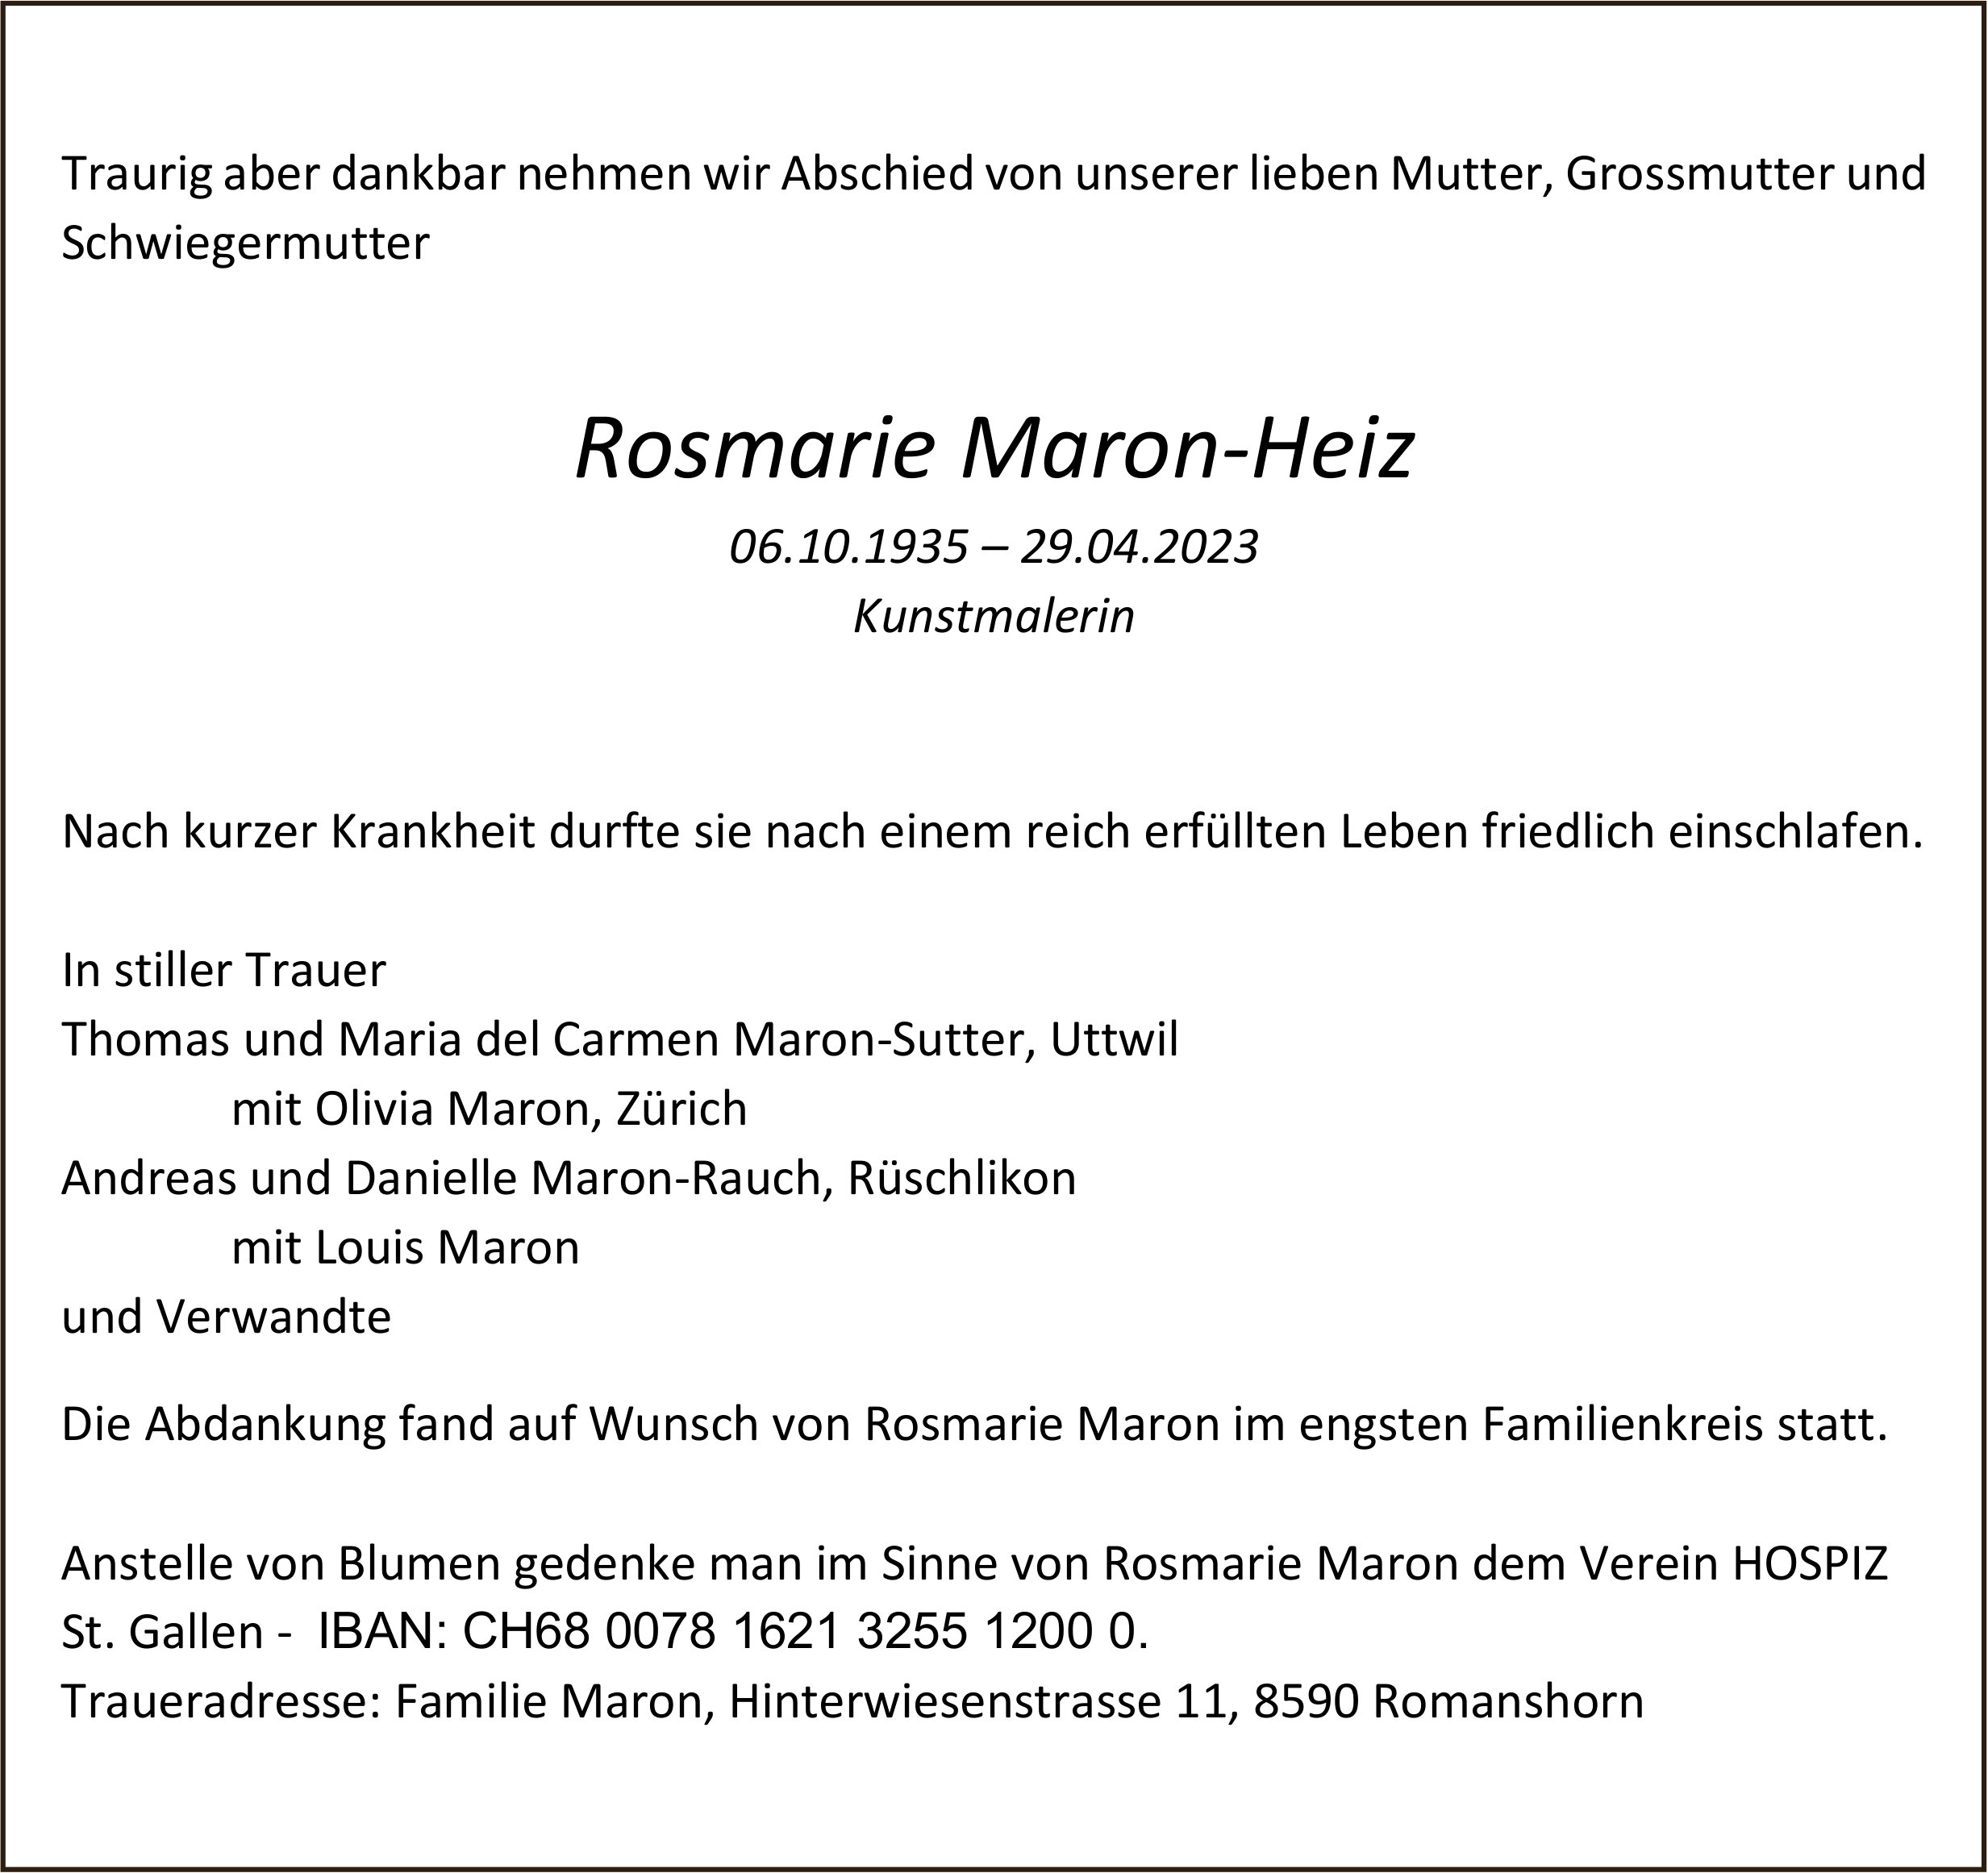 Maron-Heiz Rosmarie, April 2023 / TA